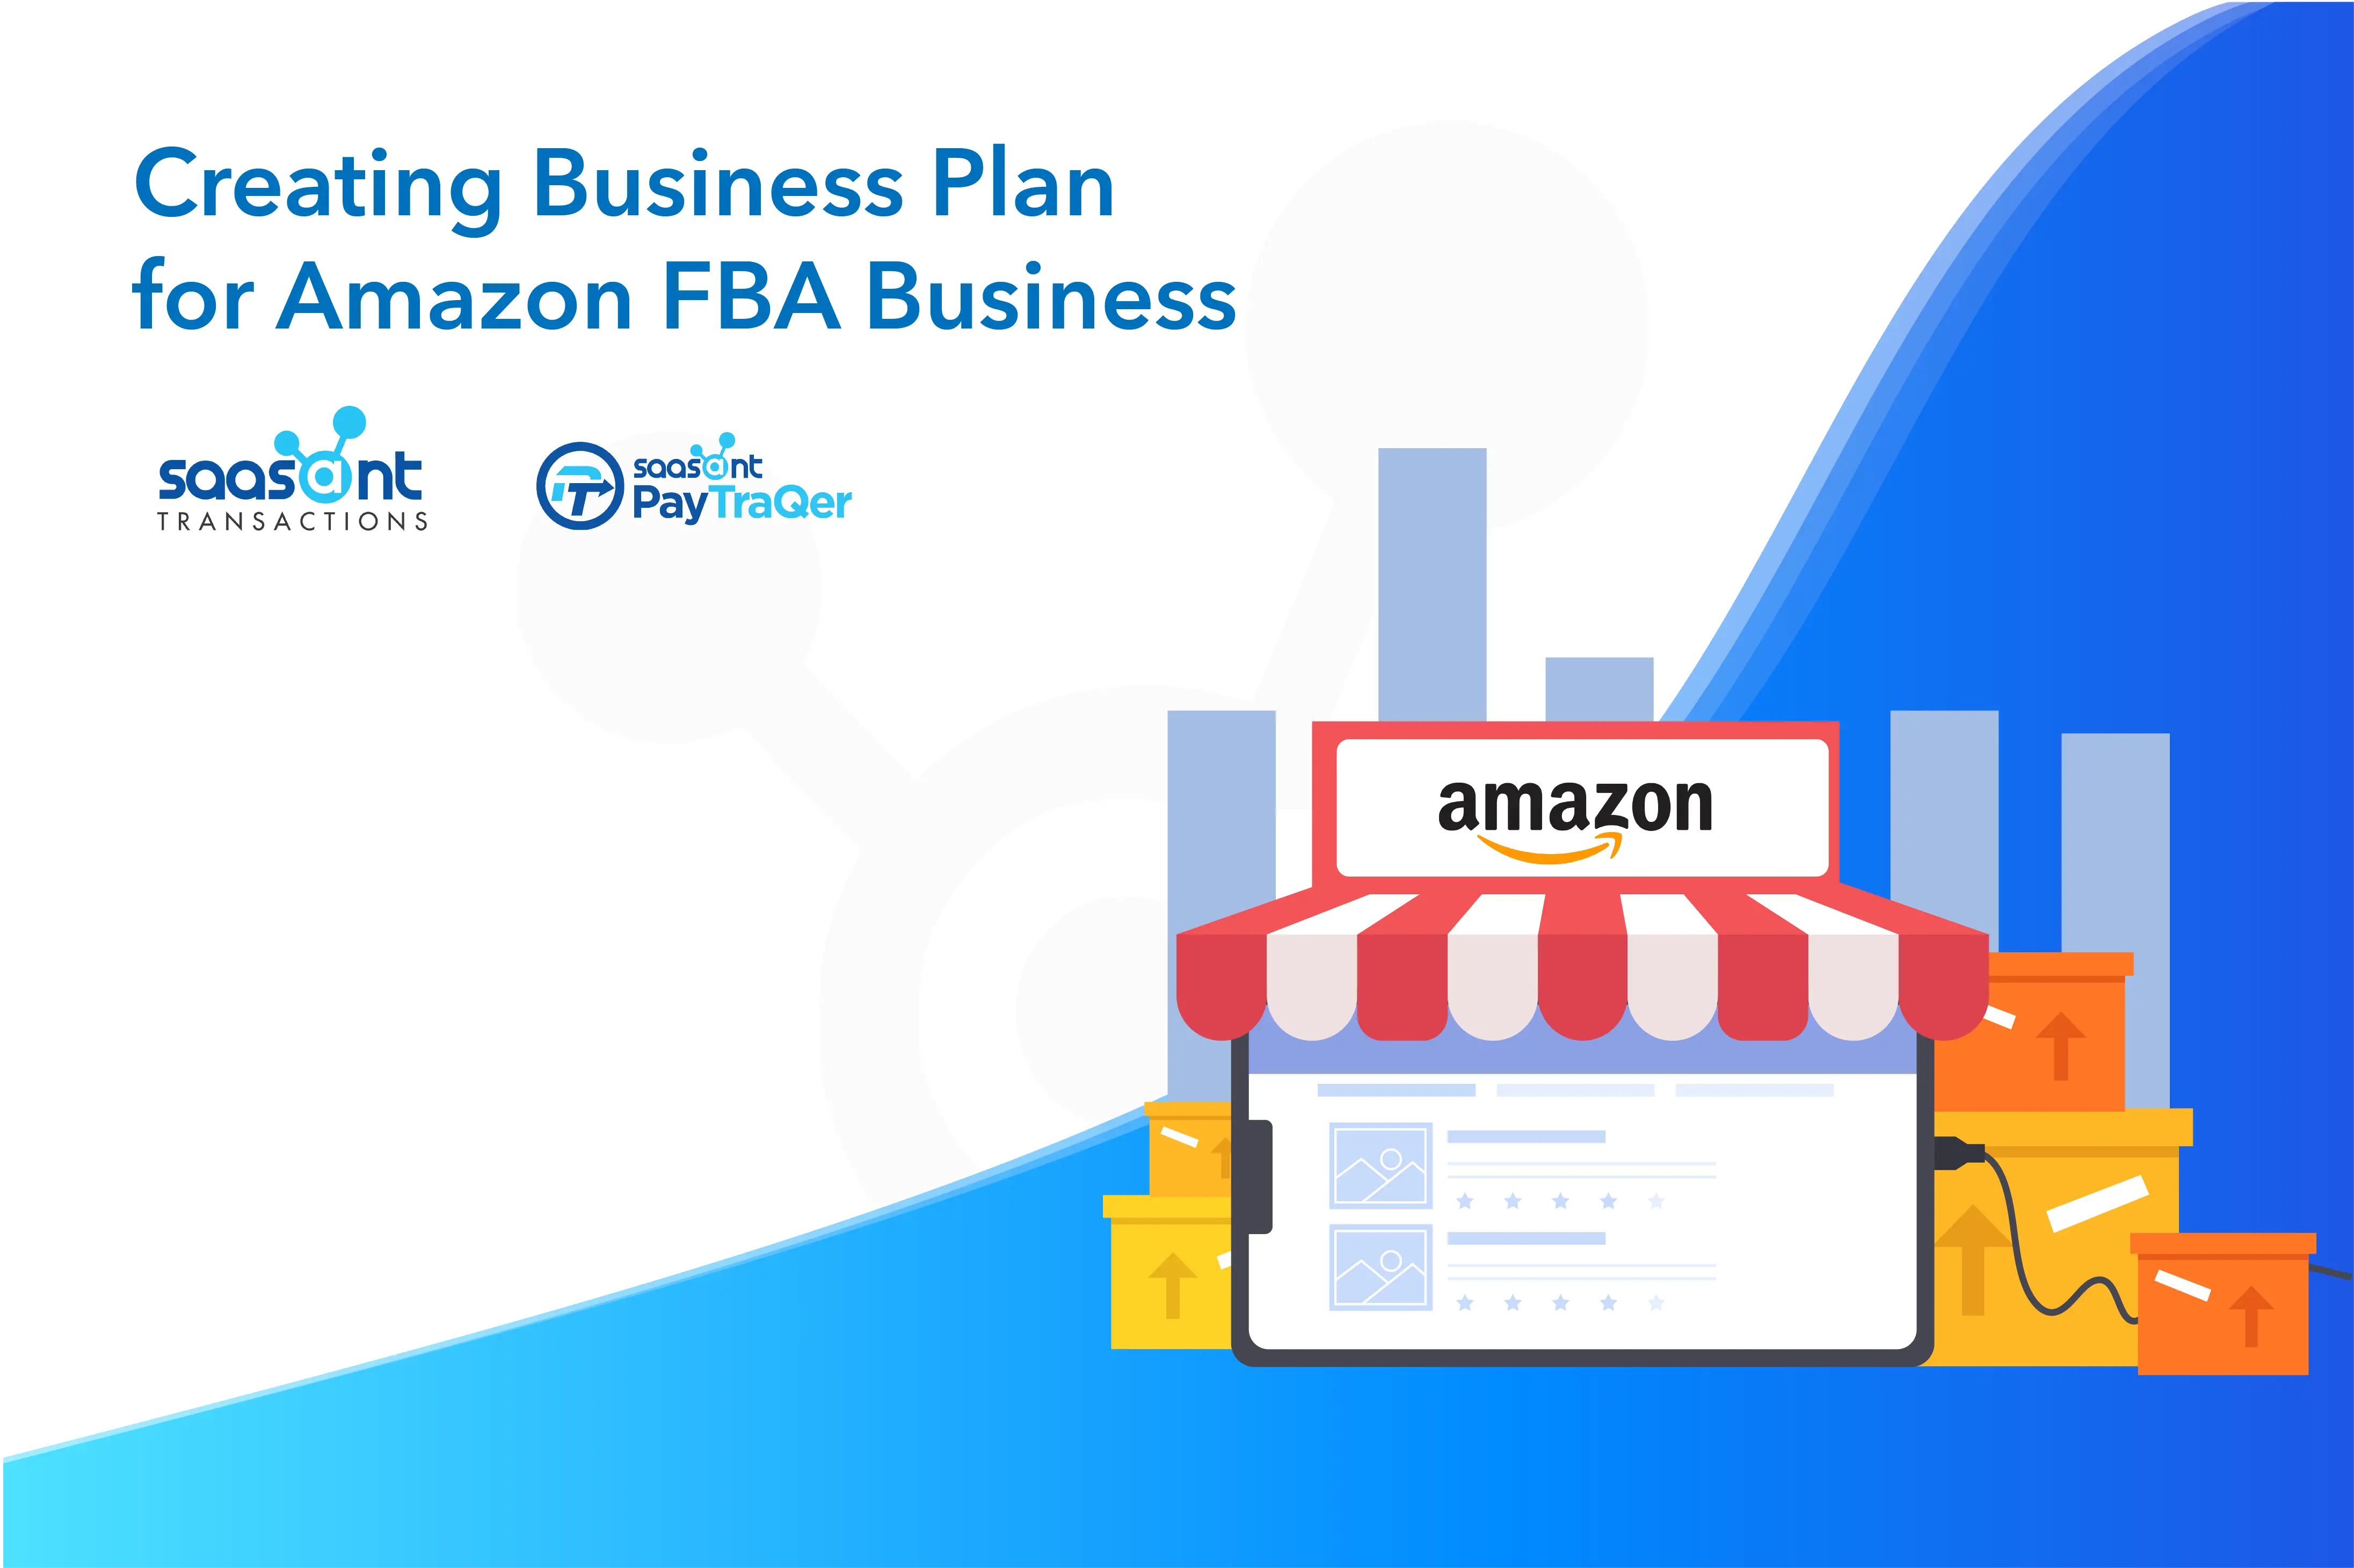 fba business plan